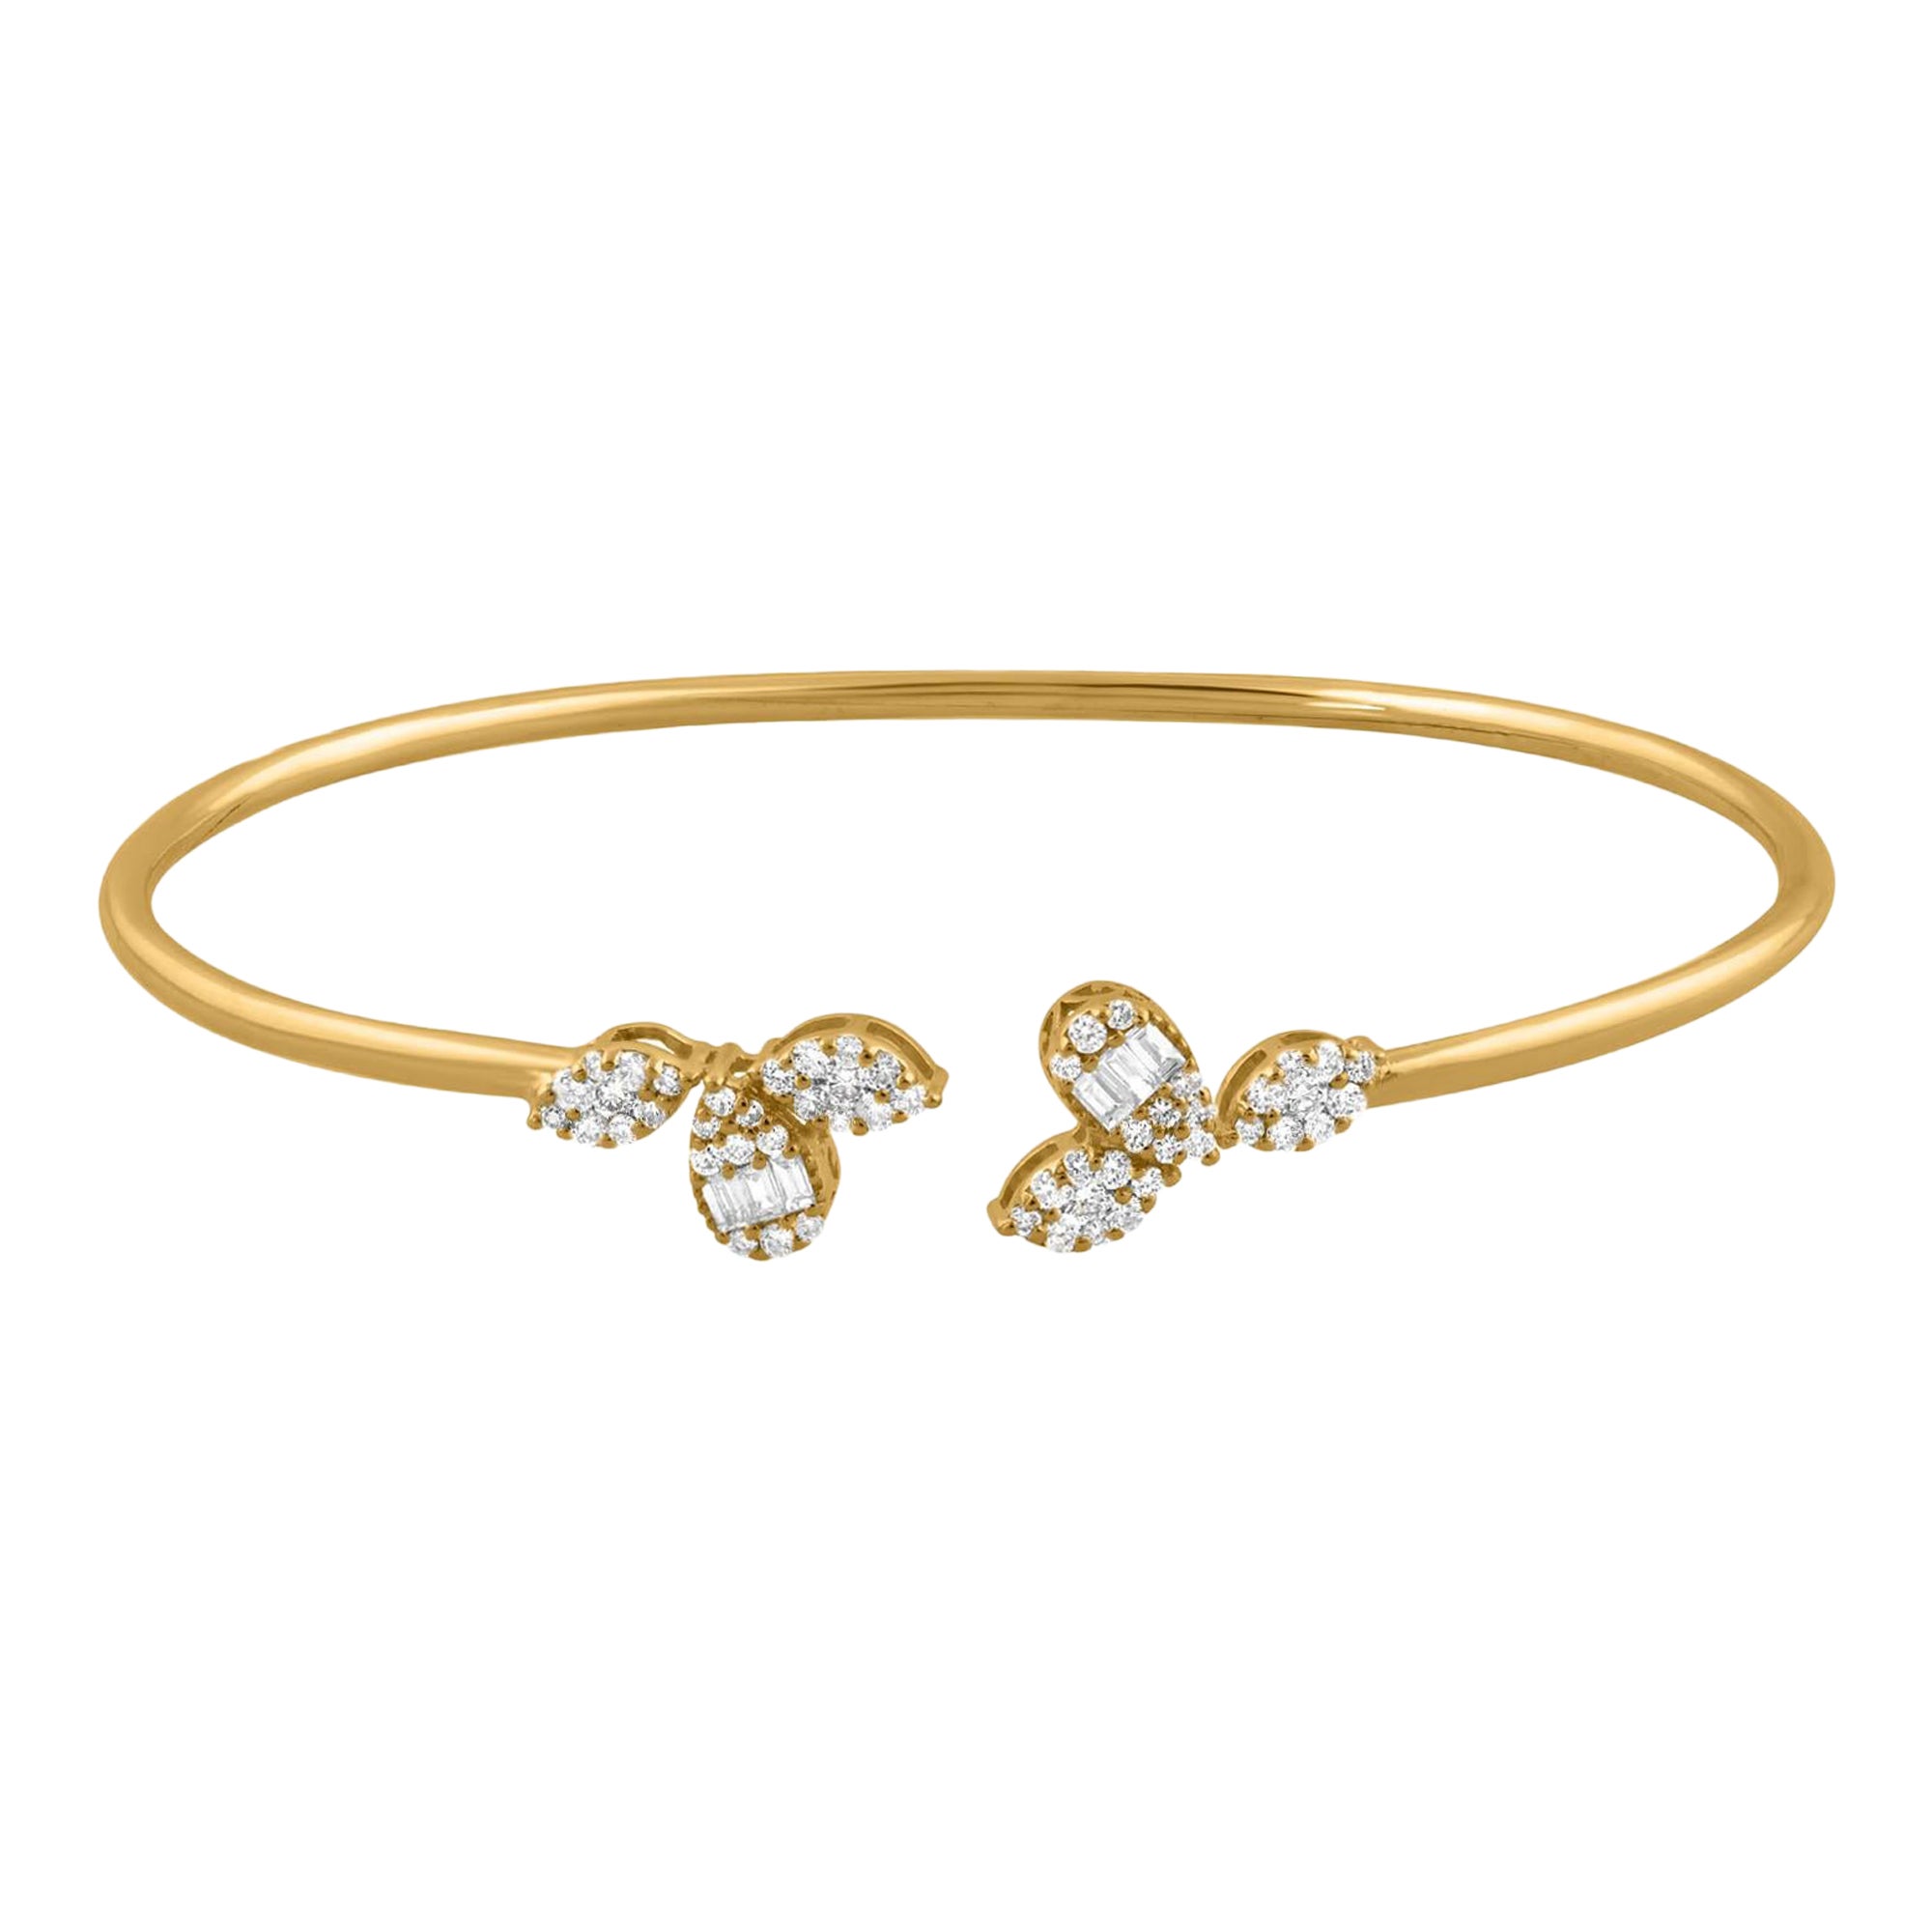 0.60 Carat Baguette Diamond Cuff Bangle Bracelet 18 Karat Yellow Gold Jewelry For Sale